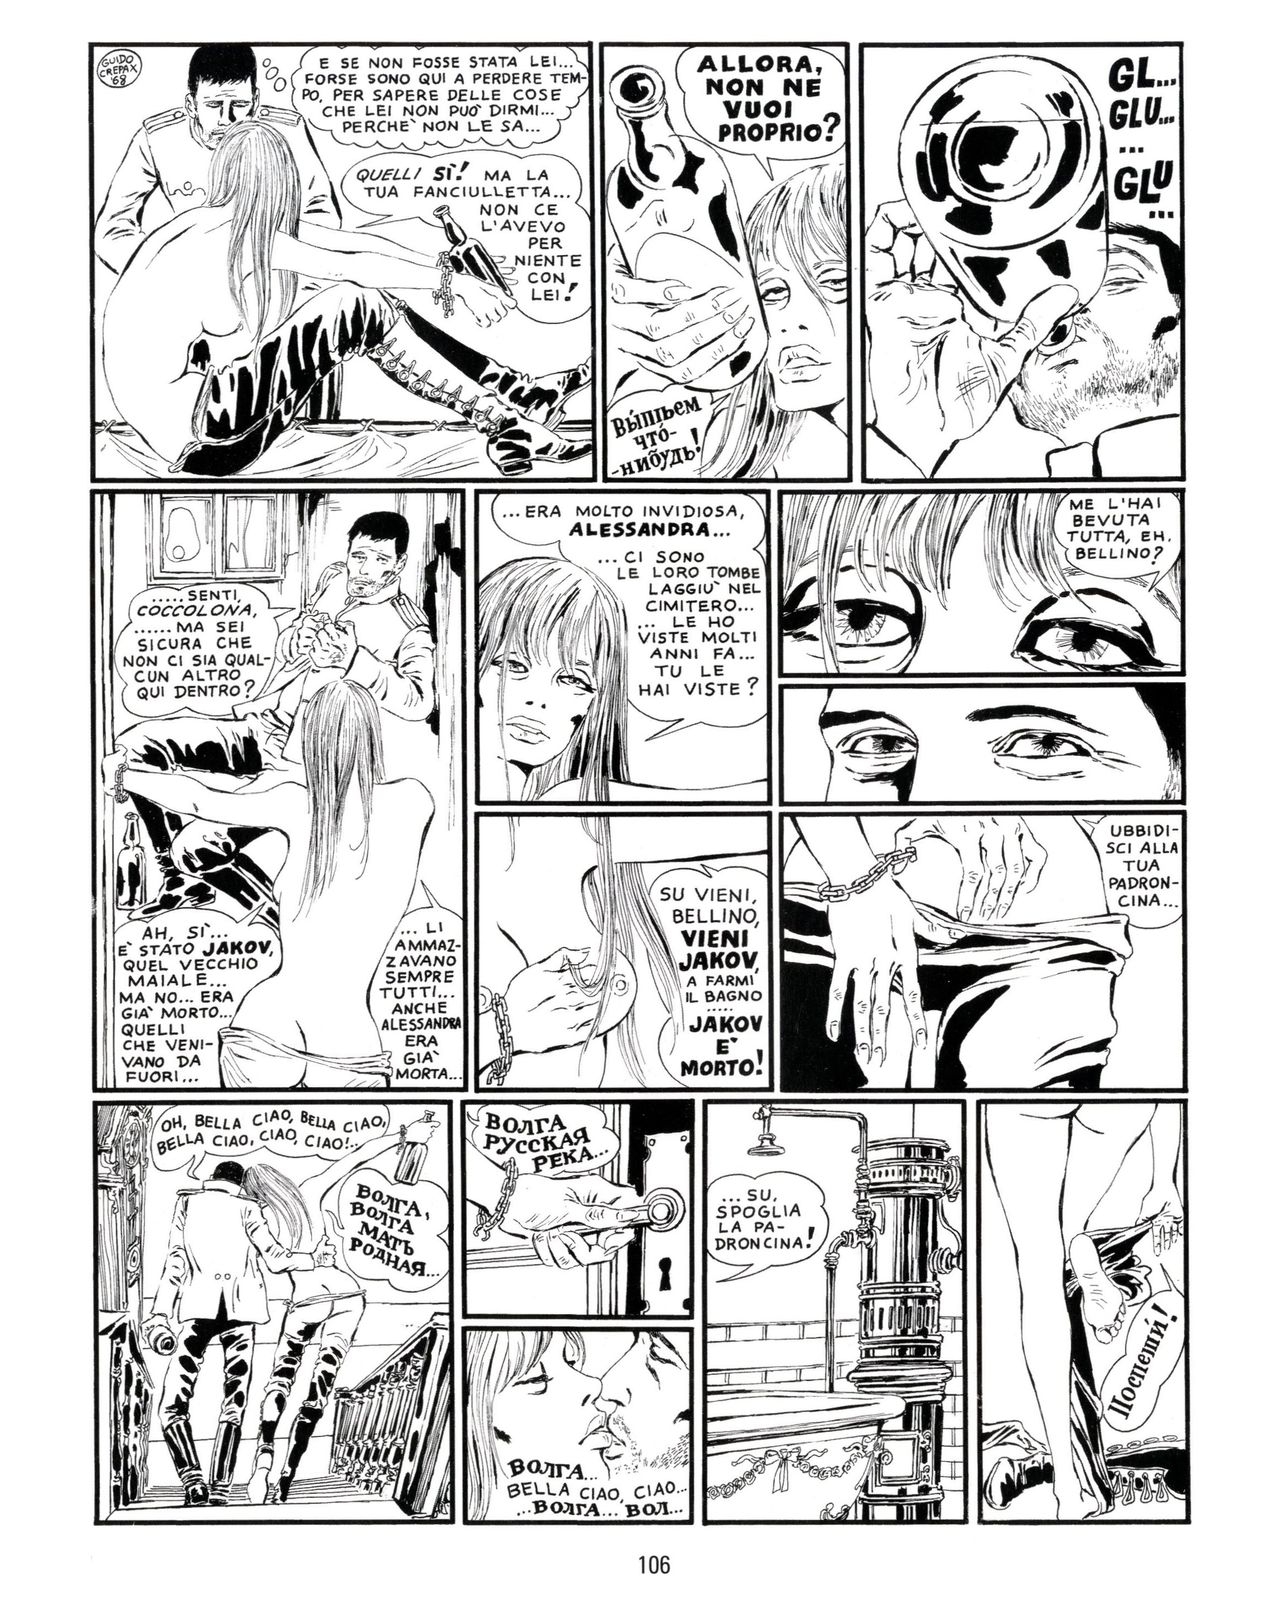 [Guido Crepax] Erotica Fumetti #25 : L'ascesa dei sotterranei : I cavalieri ciechi [Italian] 107